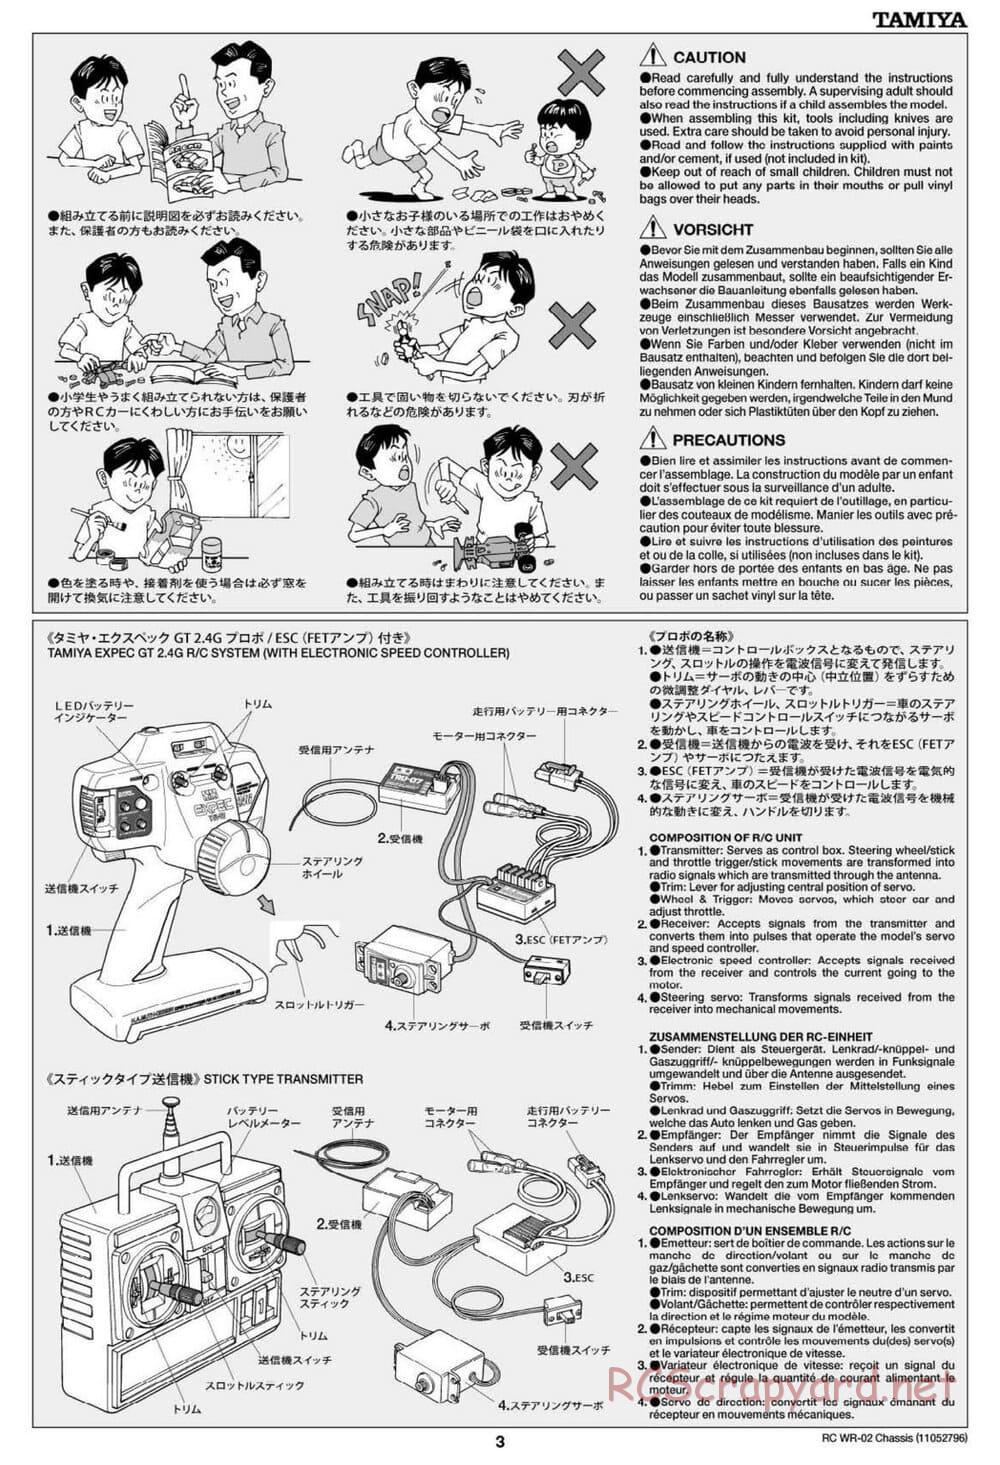 Tamiya - WR-02 Chassis - Manual - Page 3